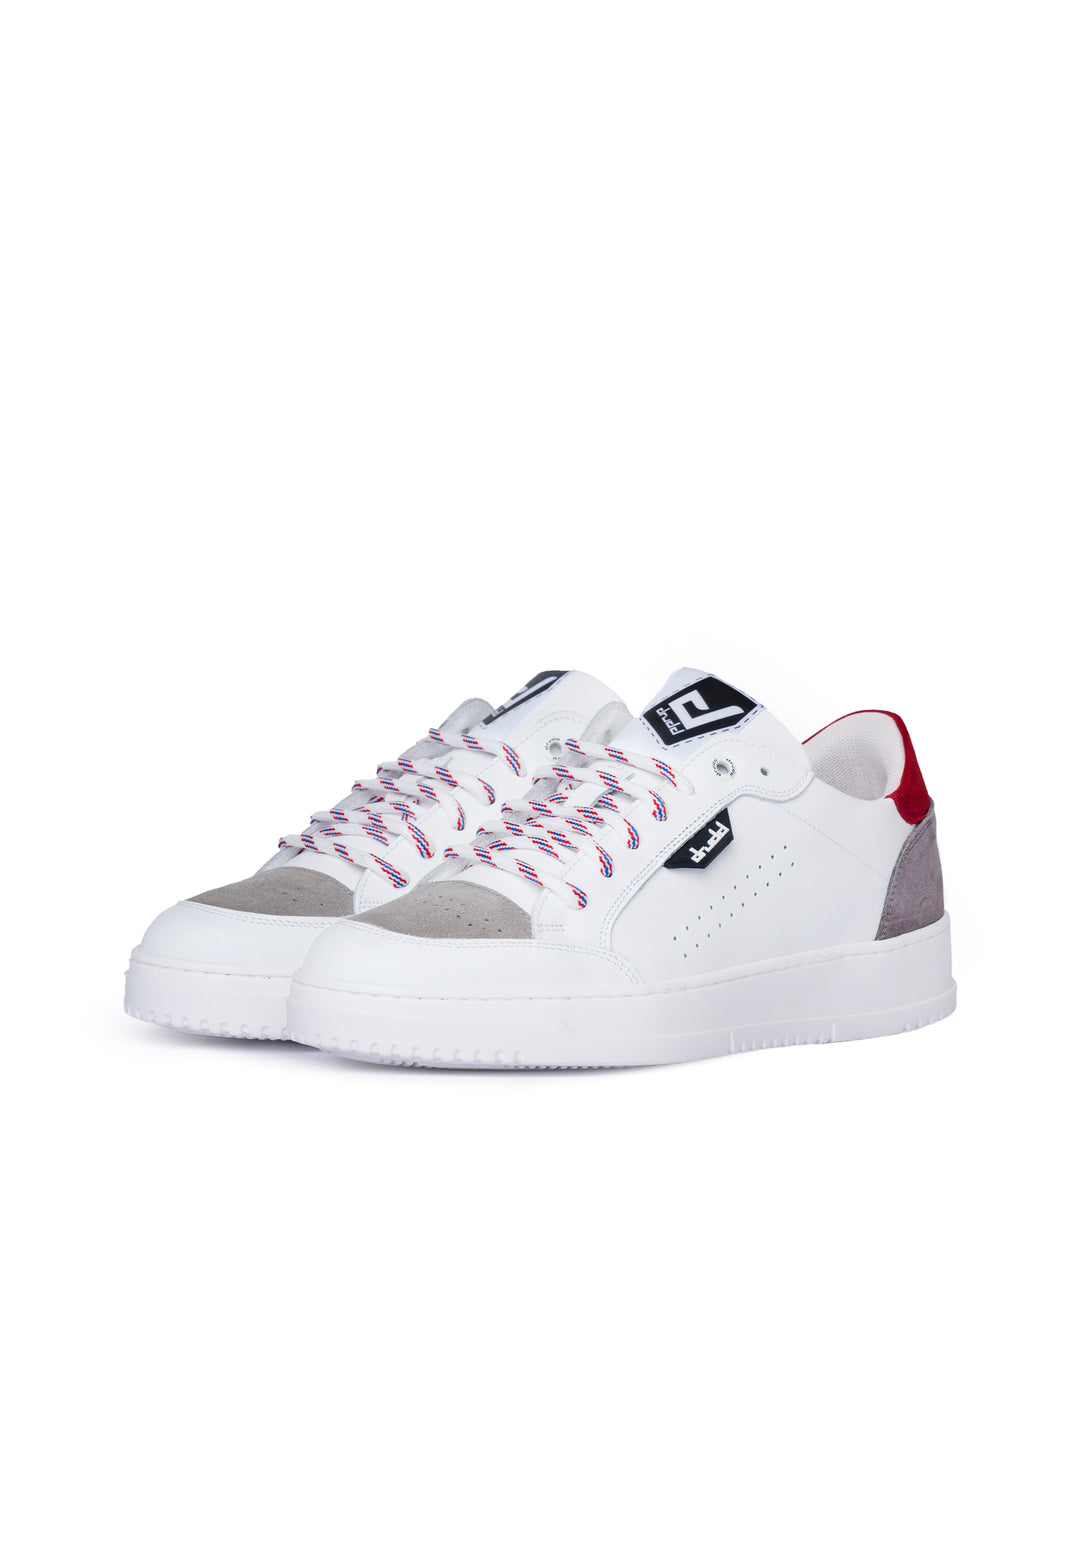 Sneakers Pelle Bianca e Rossa - D-310